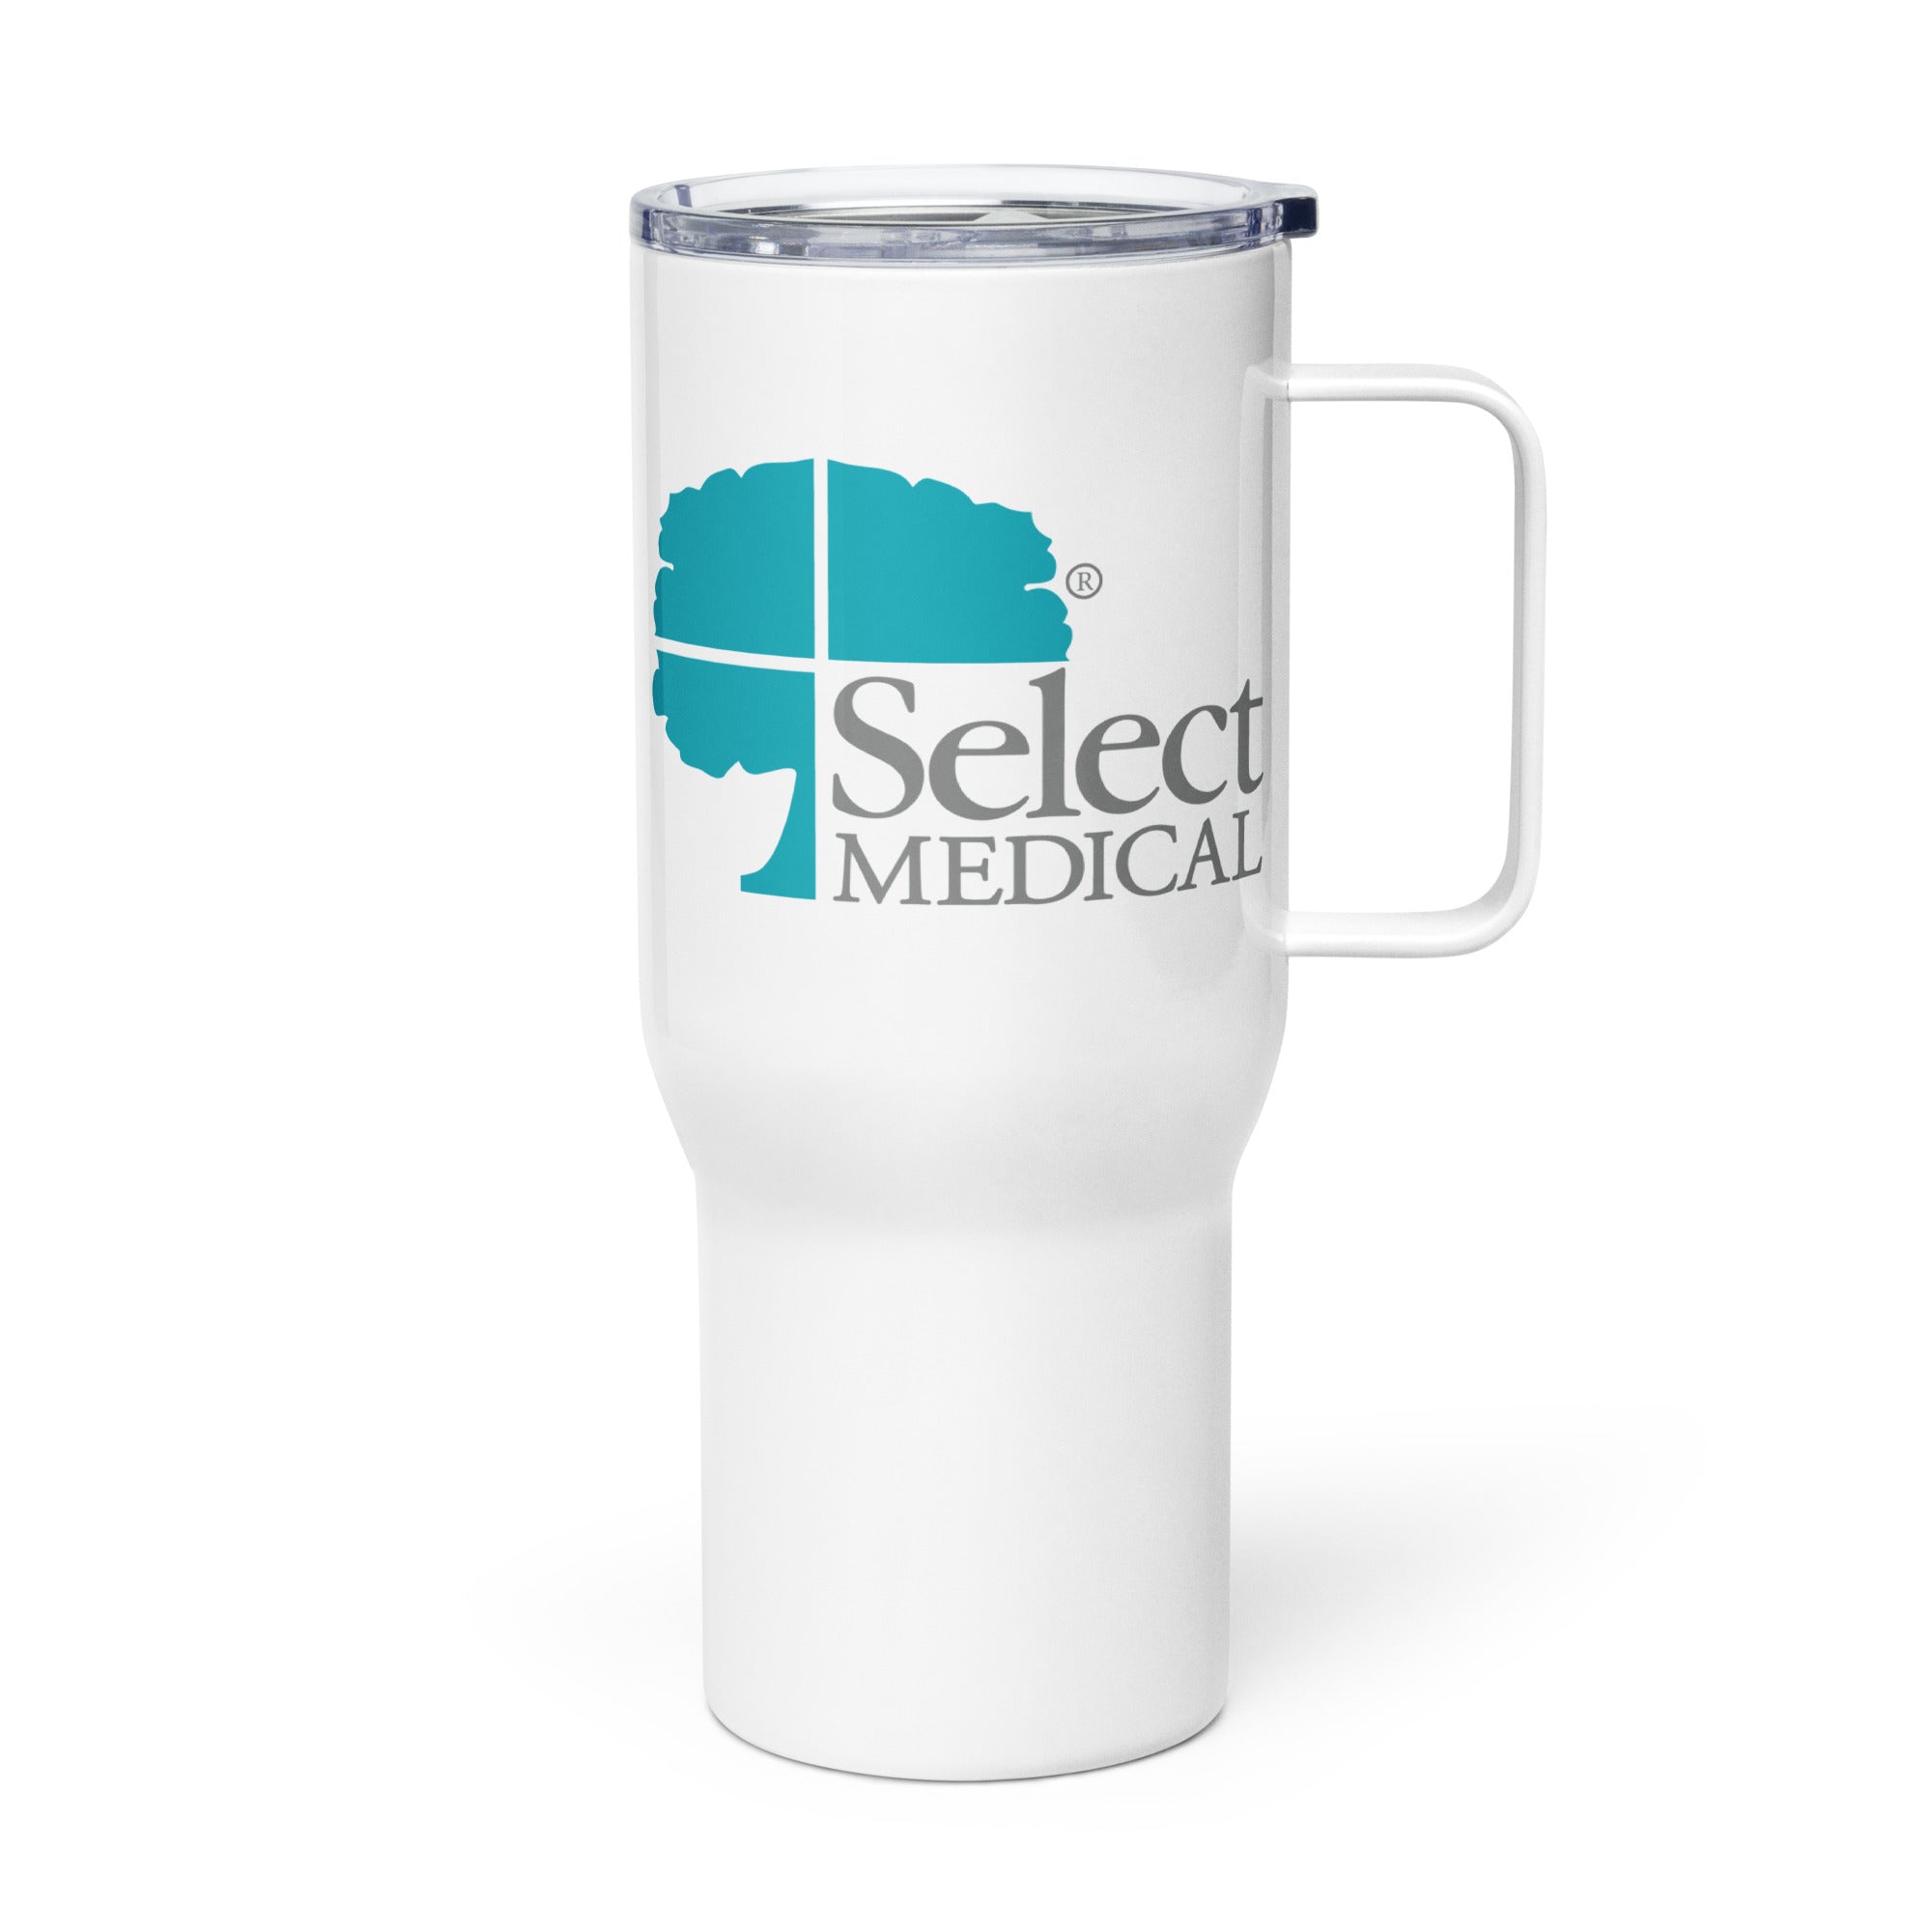 Select Medical Travel mug with a handle